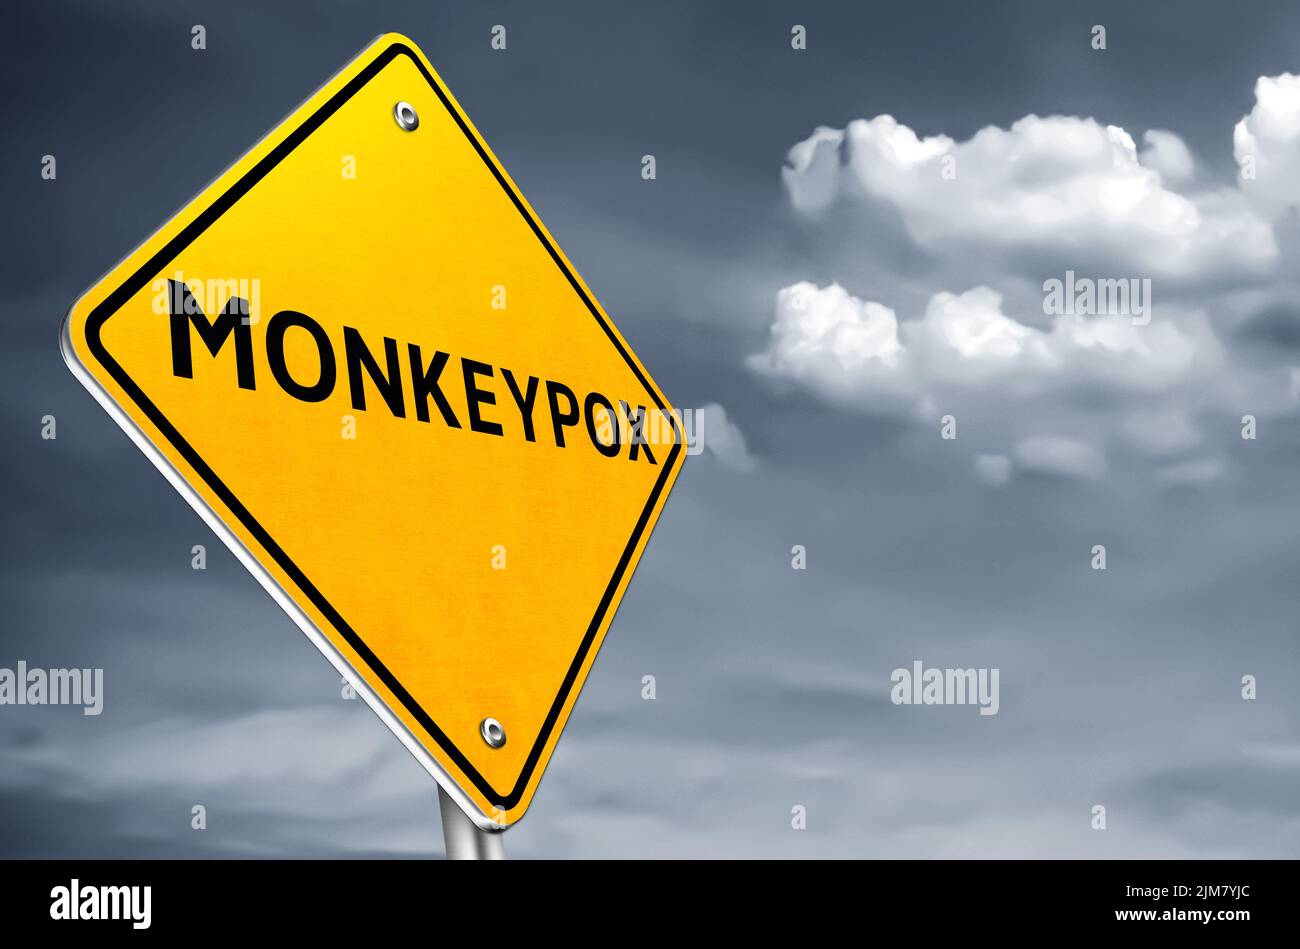 Monkeypox - yellow road sign warning Stock Photo